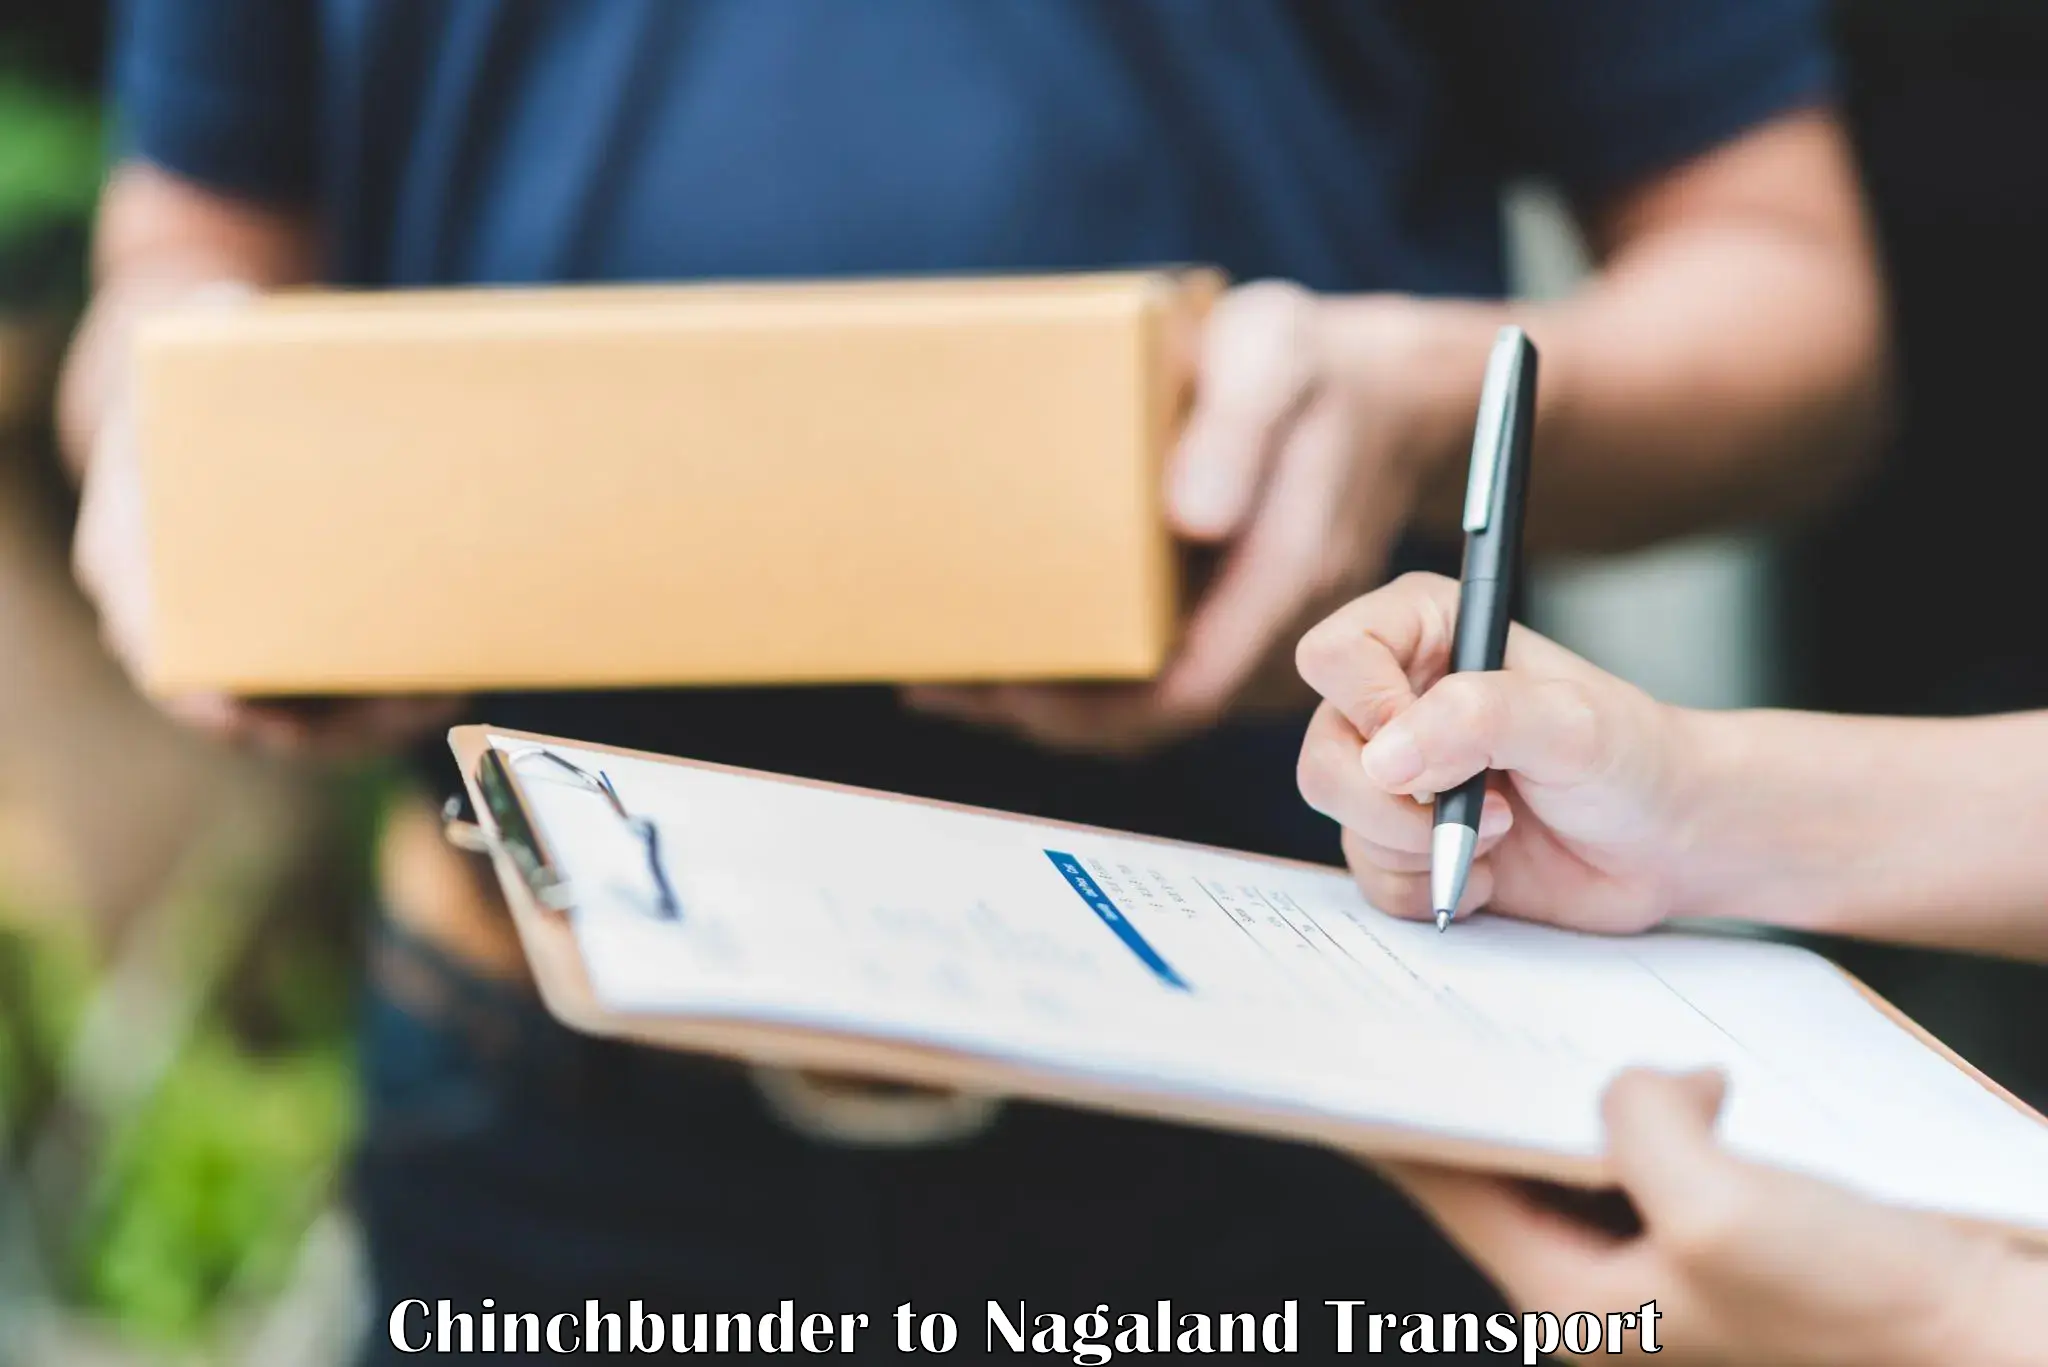 Furniture transport service Chinchbunder to Nagaland